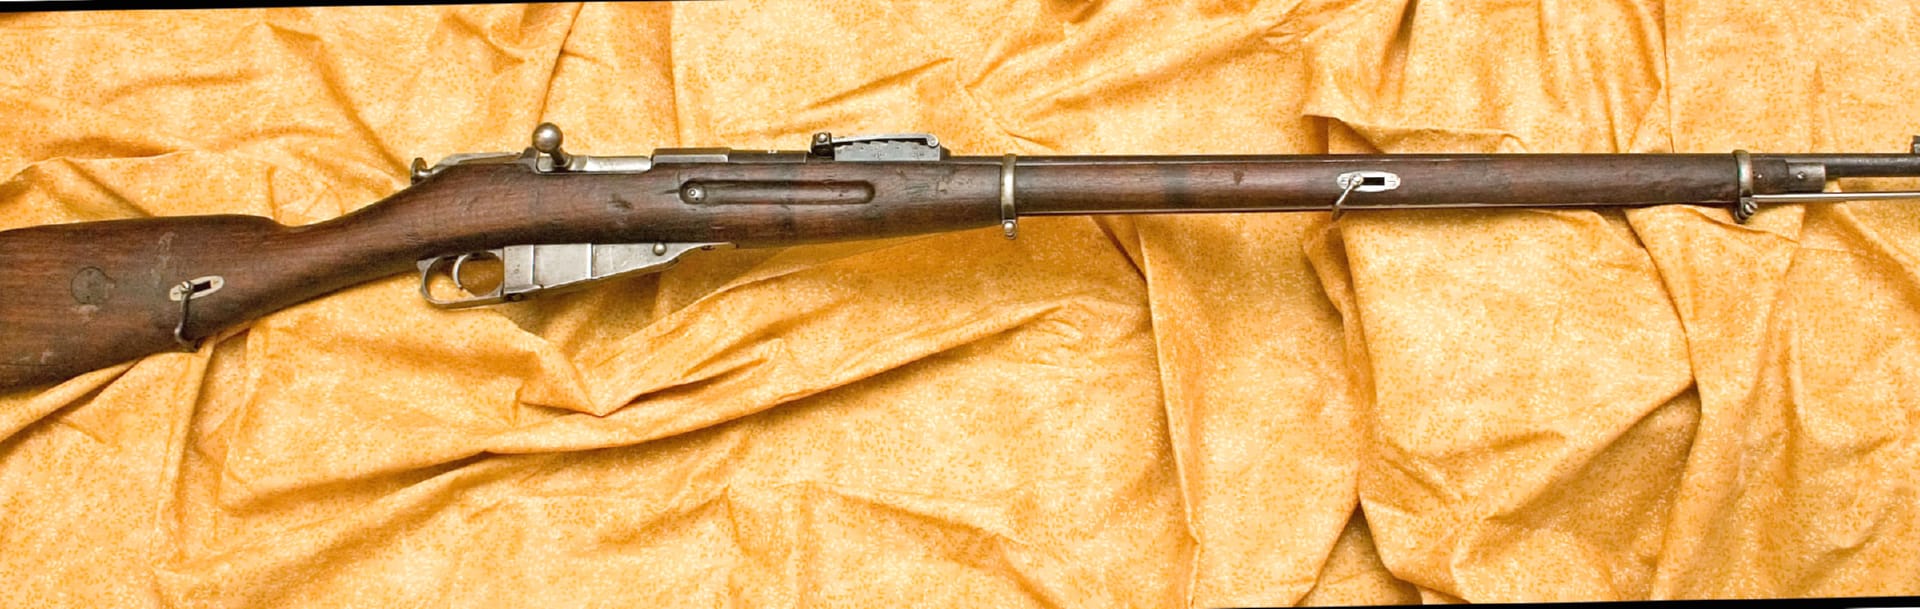 Mosin Nagant M91 Rifle at 1152 x 864 size wallpapers HD quality